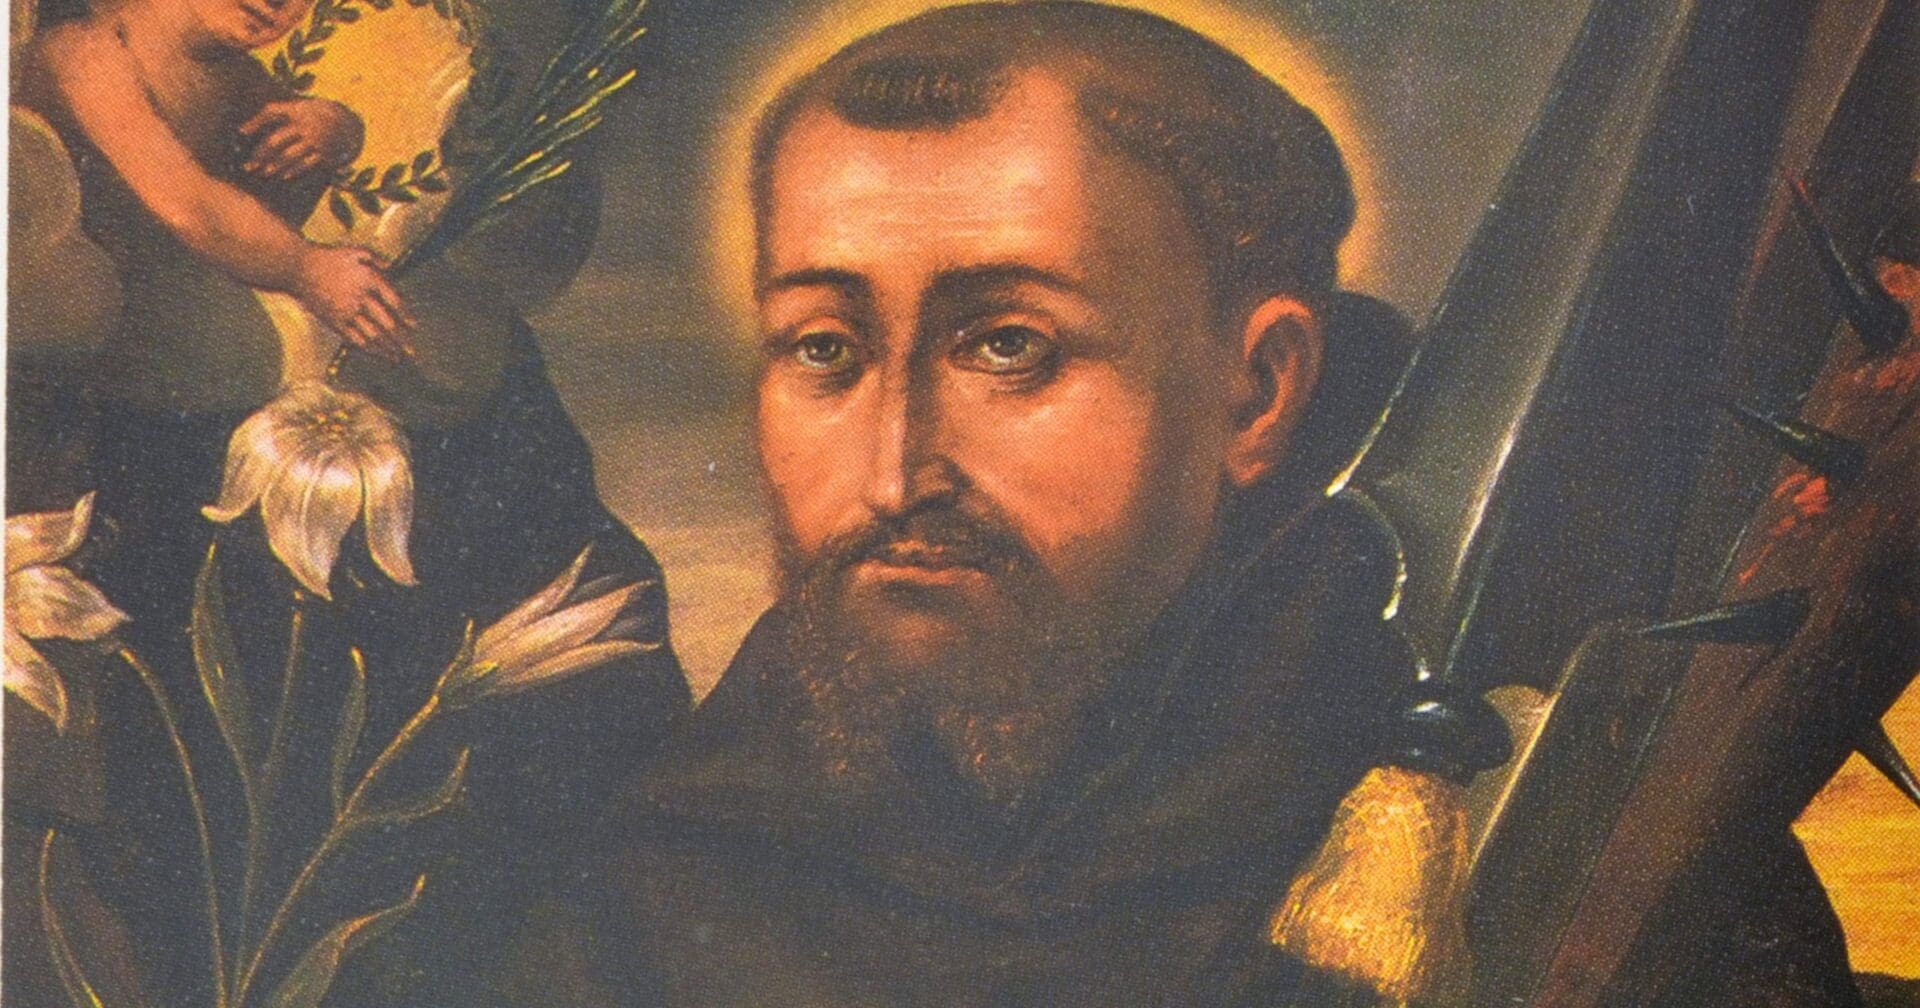 Saint Fidelis of Sigmaringen